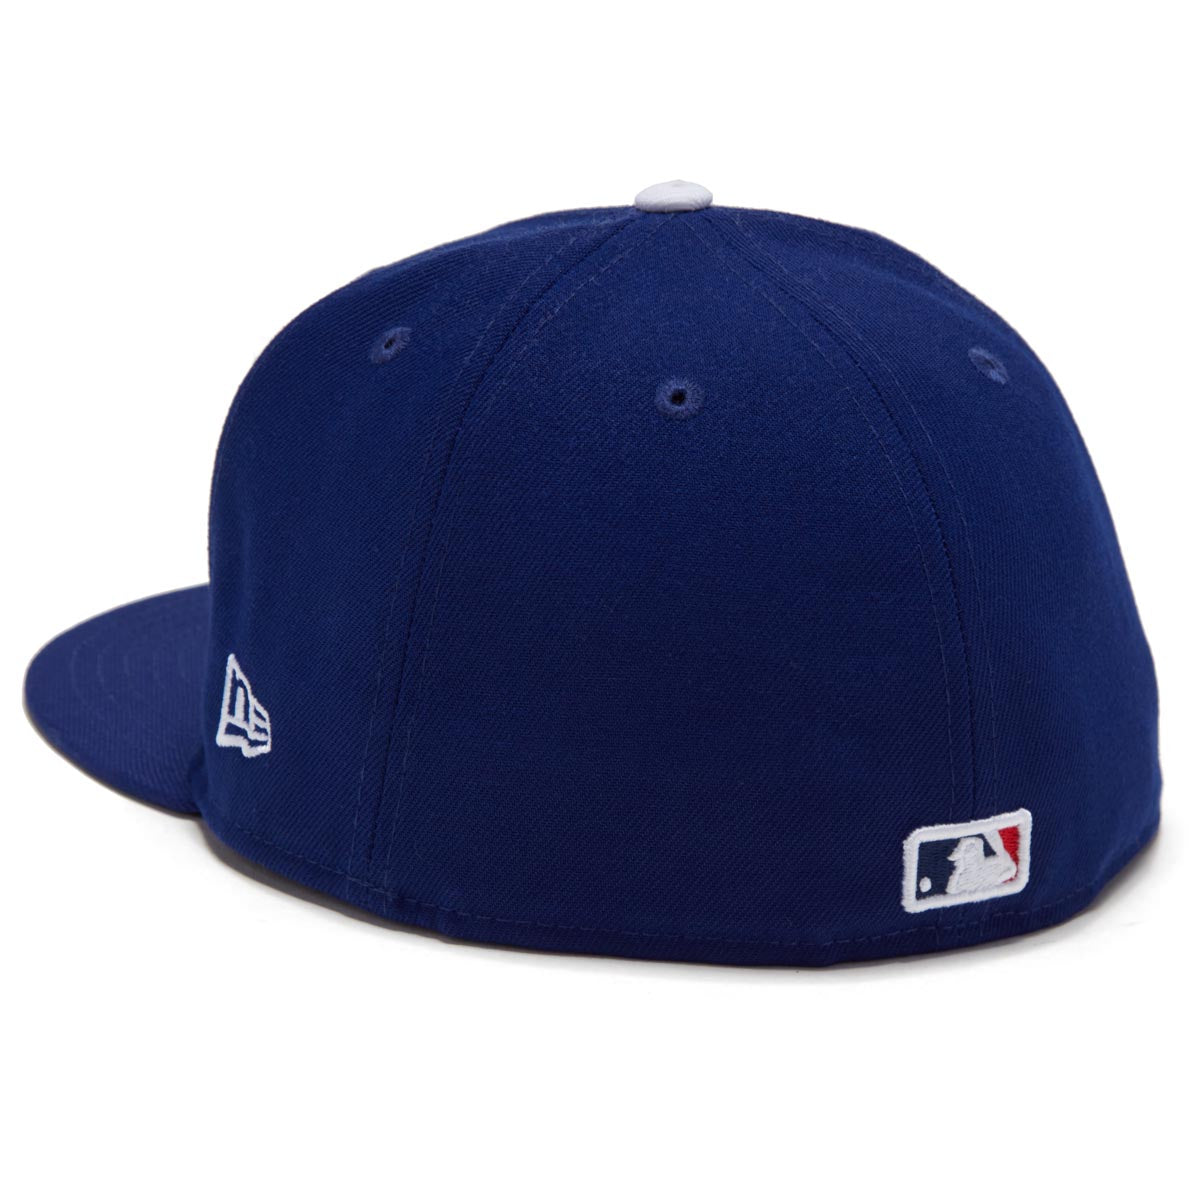 New Era x Jackie Robinson Dodgers Hat - Blue/White image 3